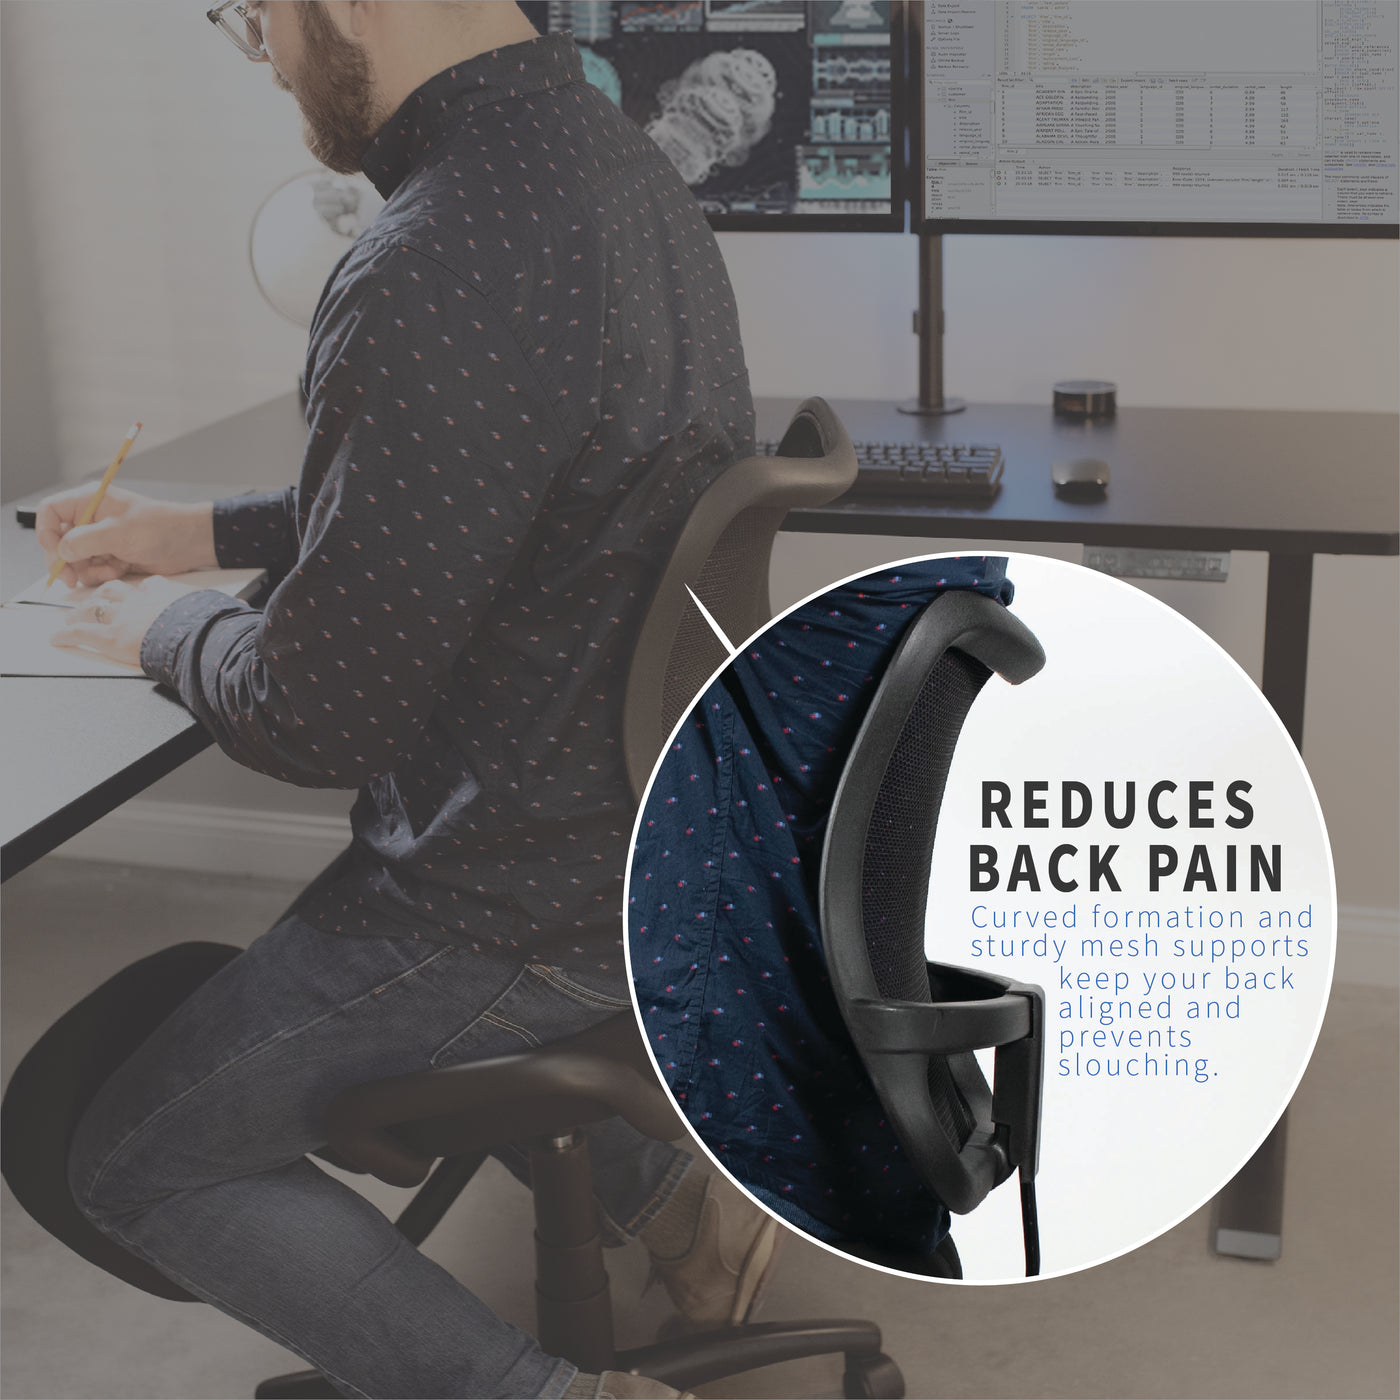 Comfortable black swivel kneeling chair to reduce back pain.